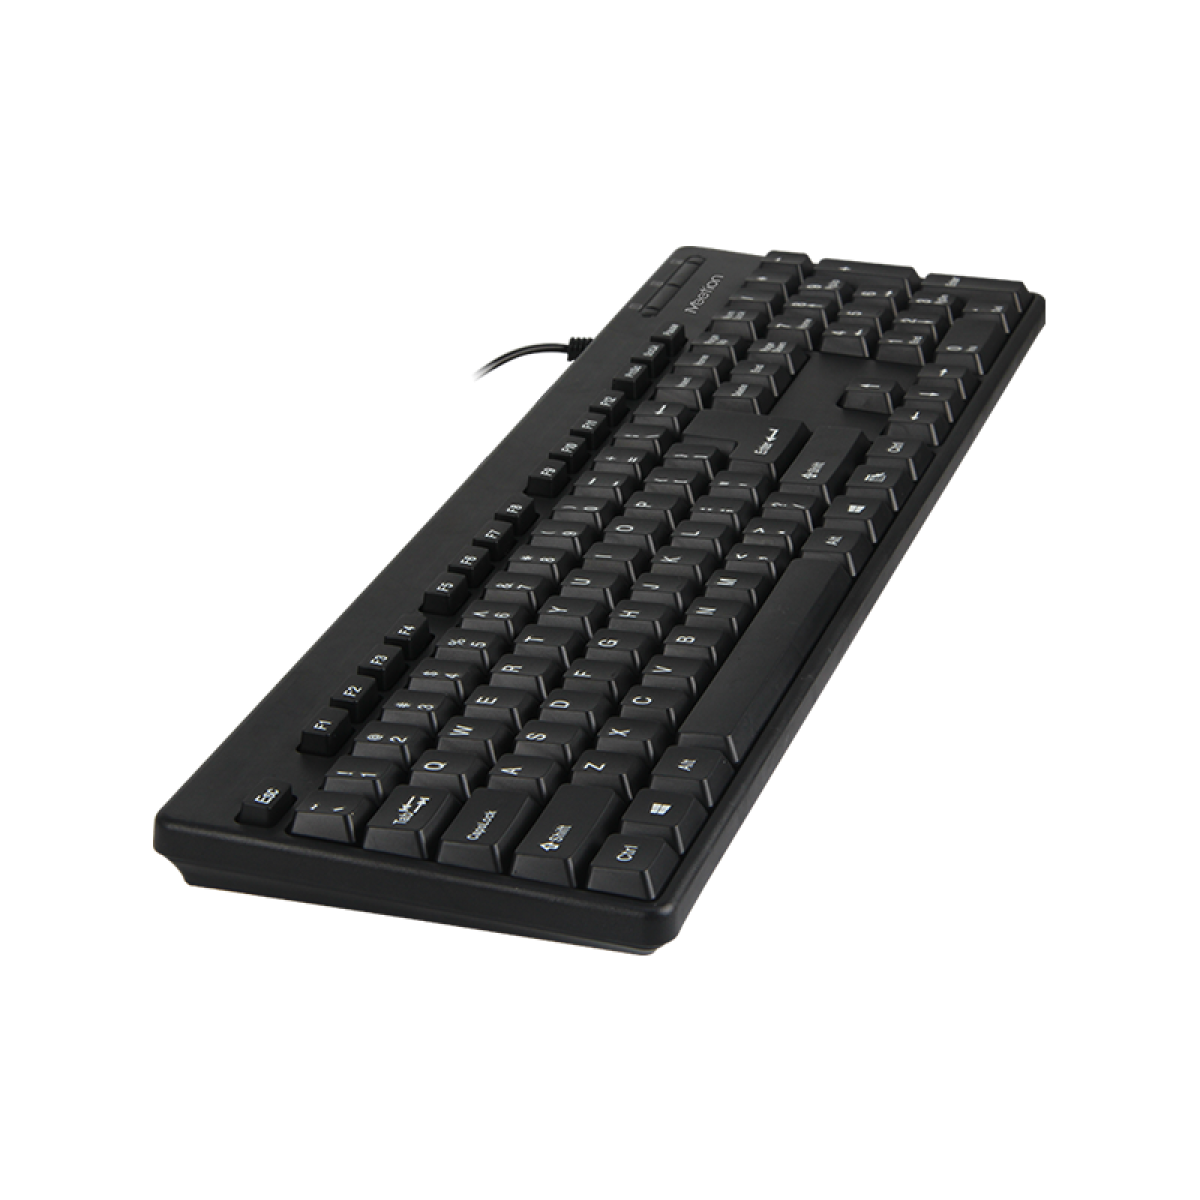 MeeTion USB Standard Corded Keyboard